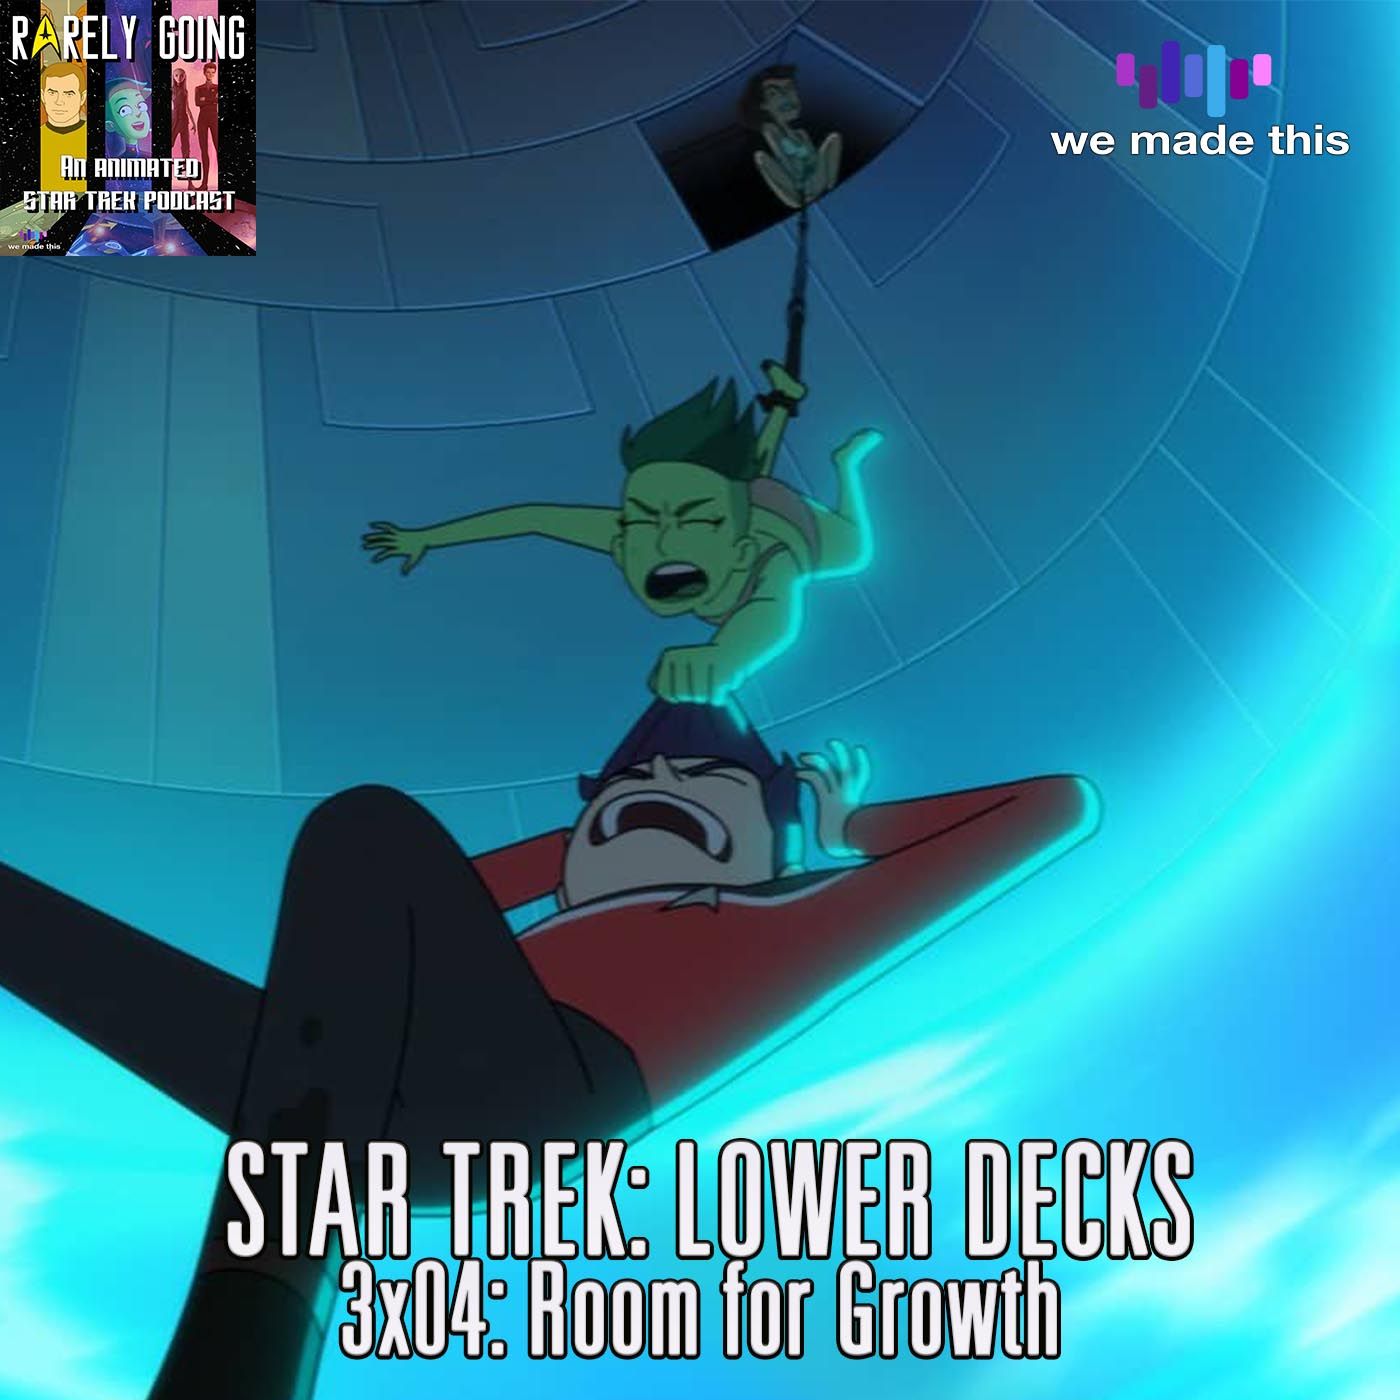 44. Star Trek: Lower Decks 3x04 - Room for Growth